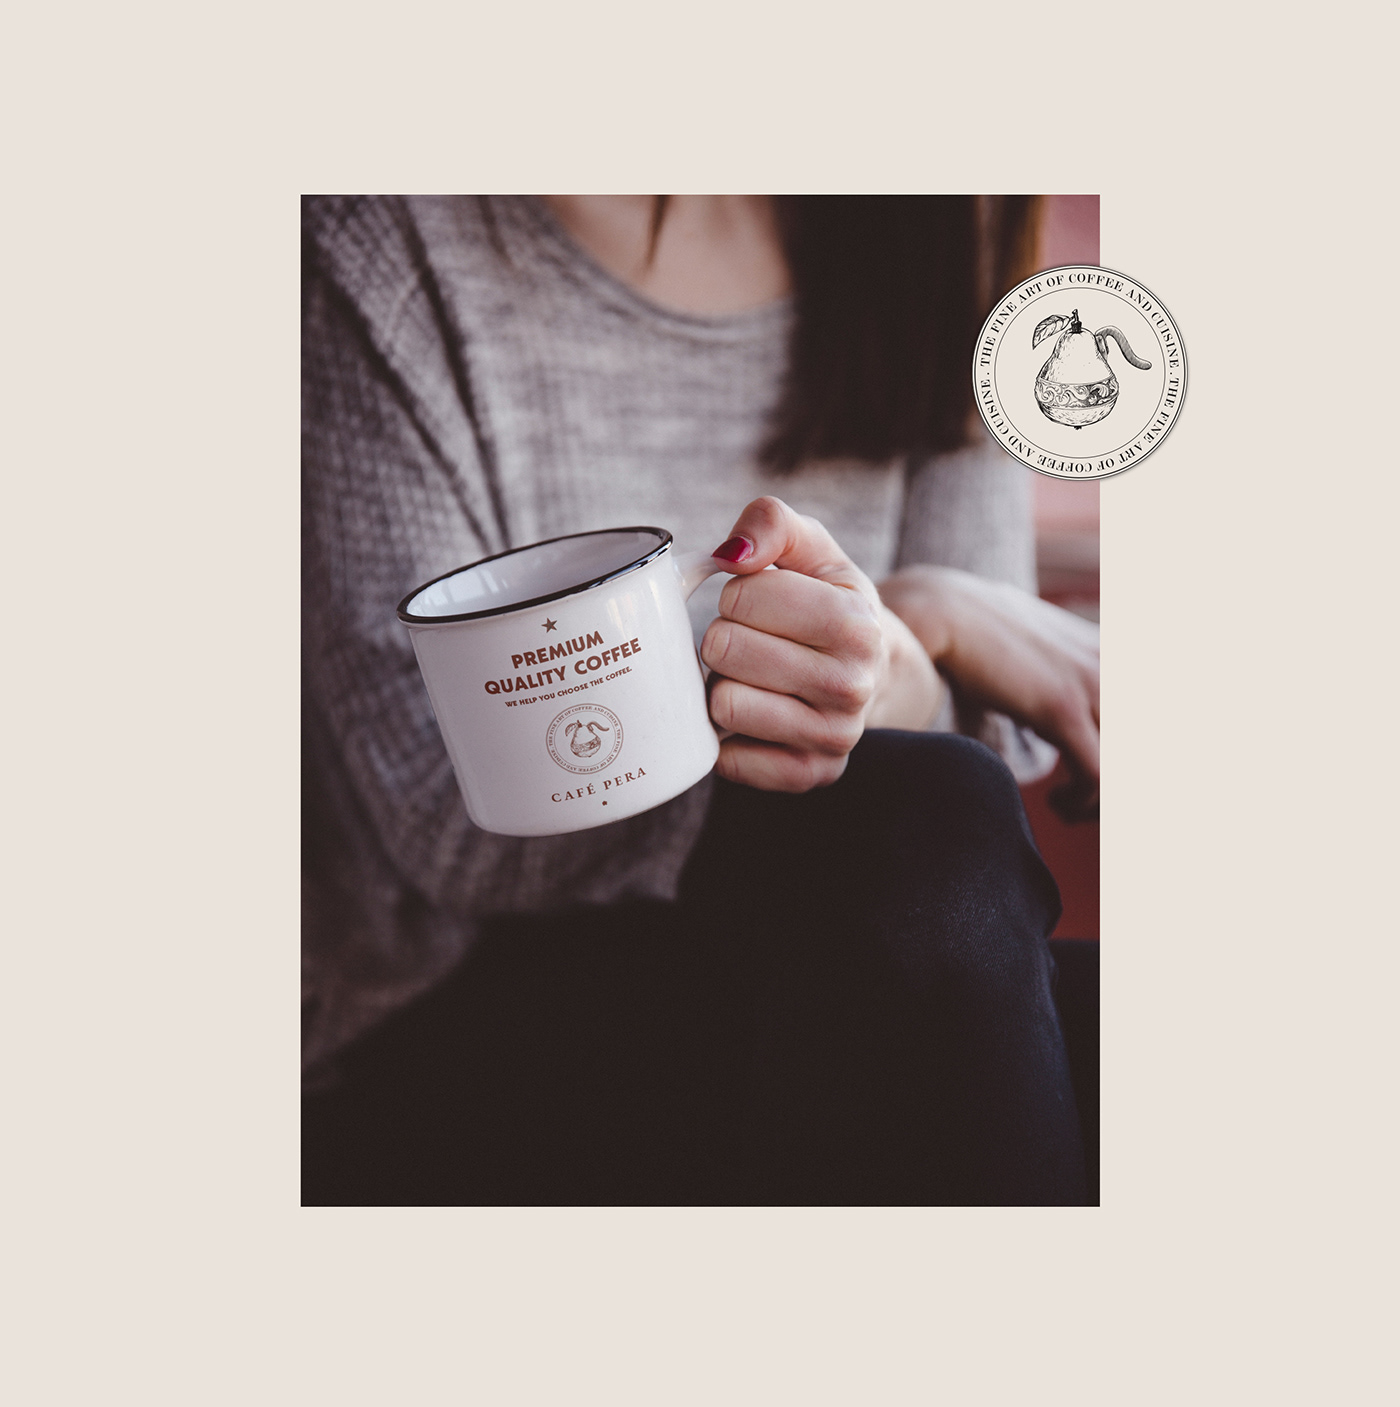 enamel mug
mug
girl mockup
coffee
premium
ceramic
drink coffee
girls
woman
cafe branding